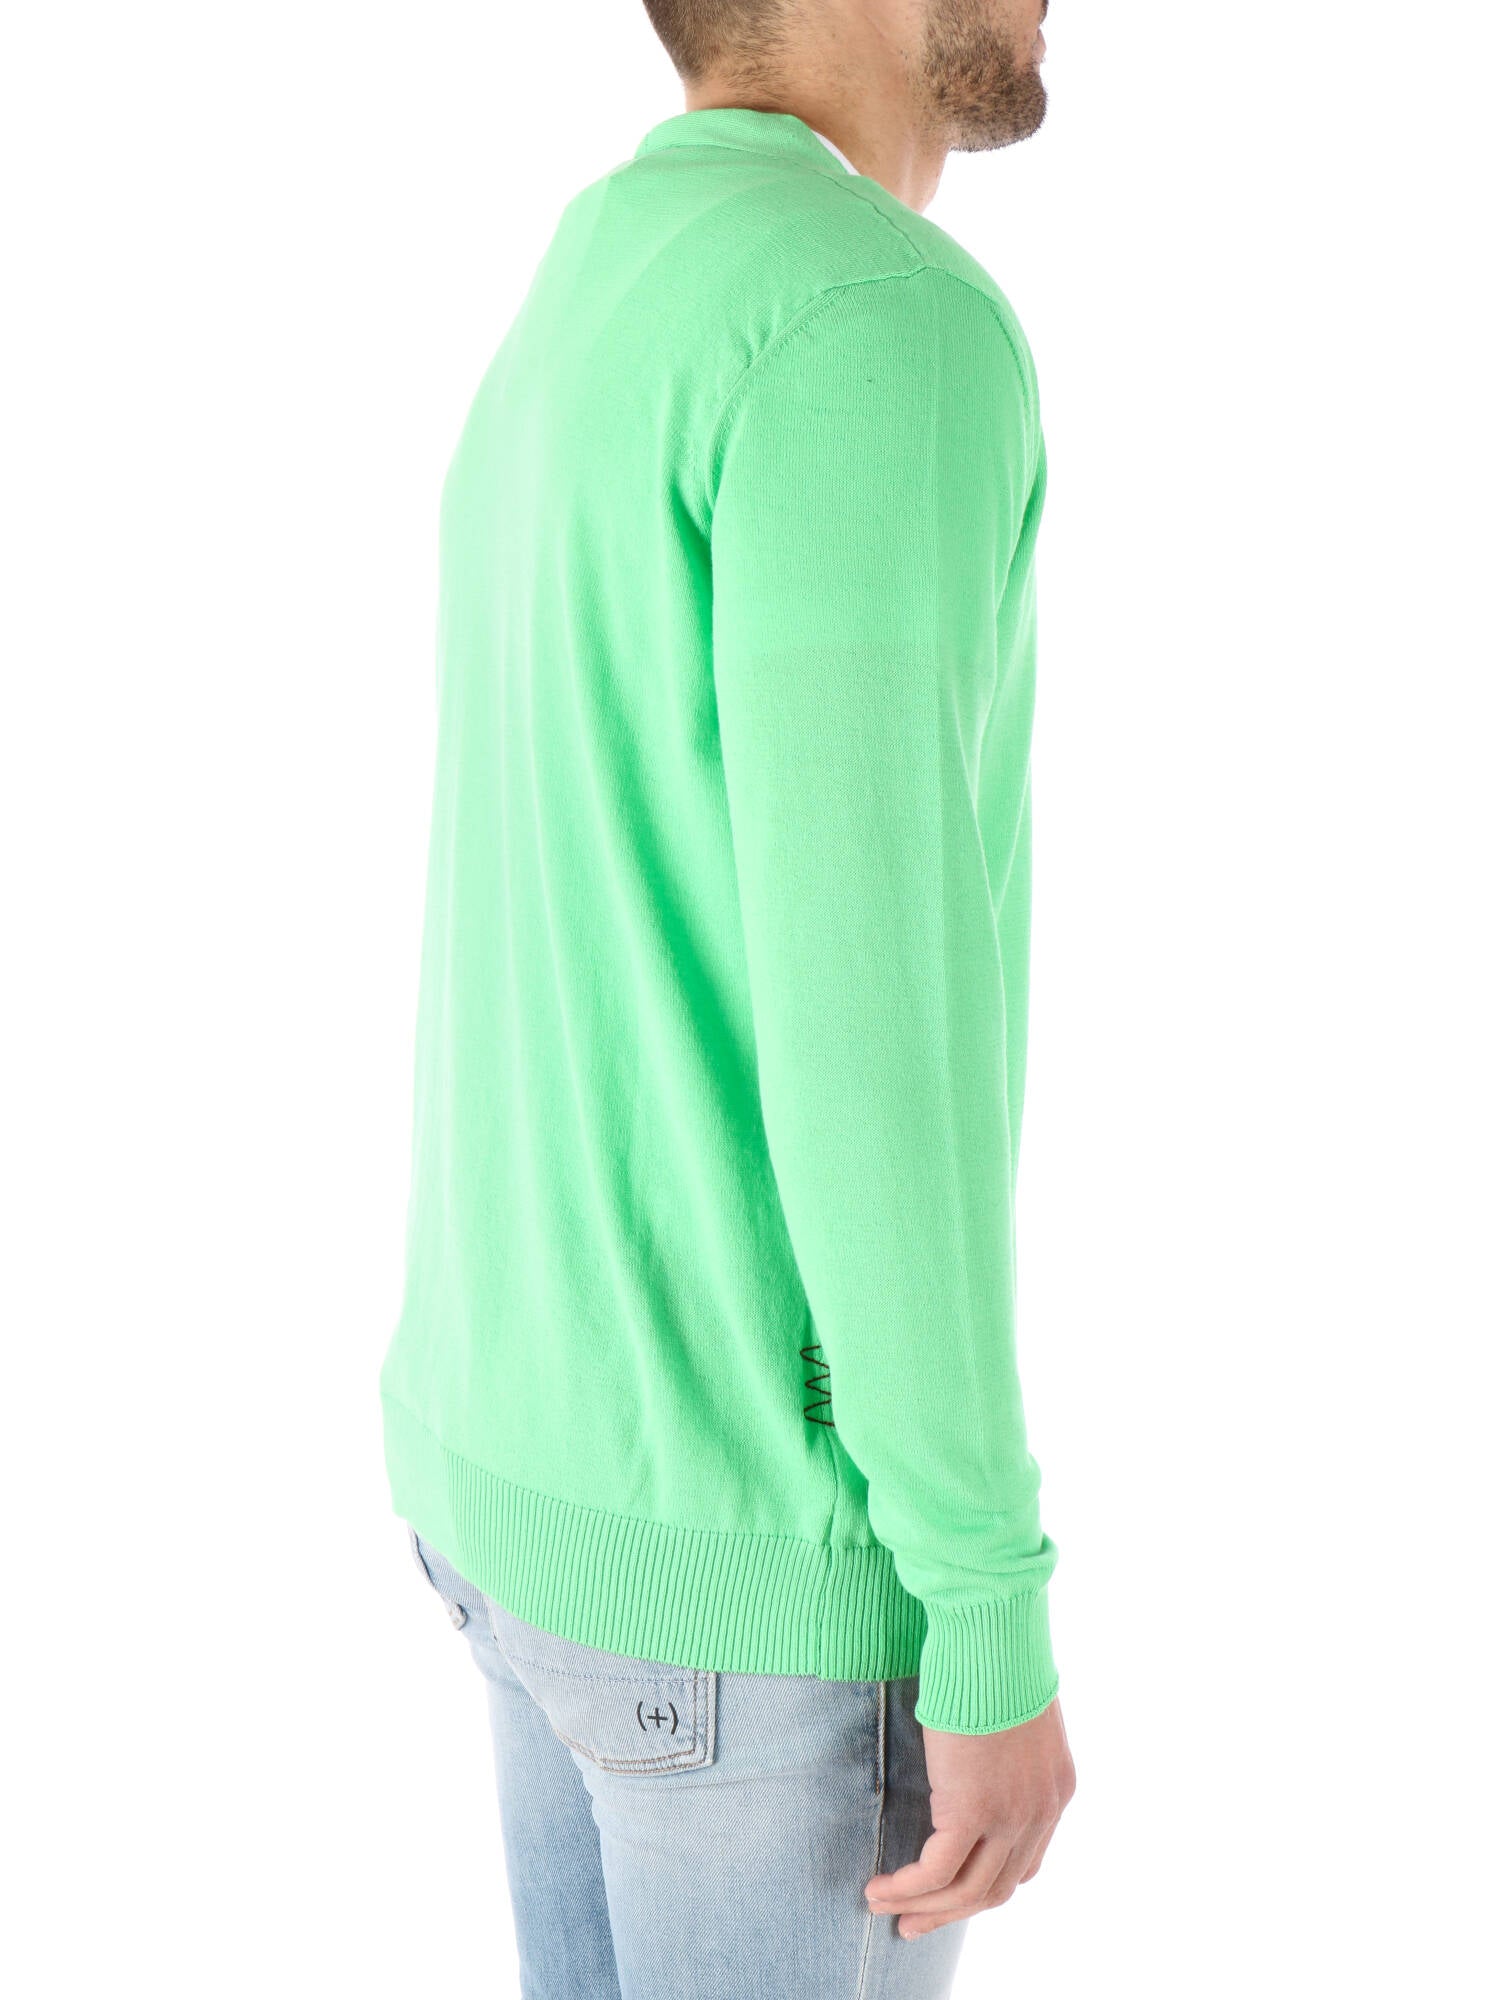 Amaranto cardigan uomo tricot verde